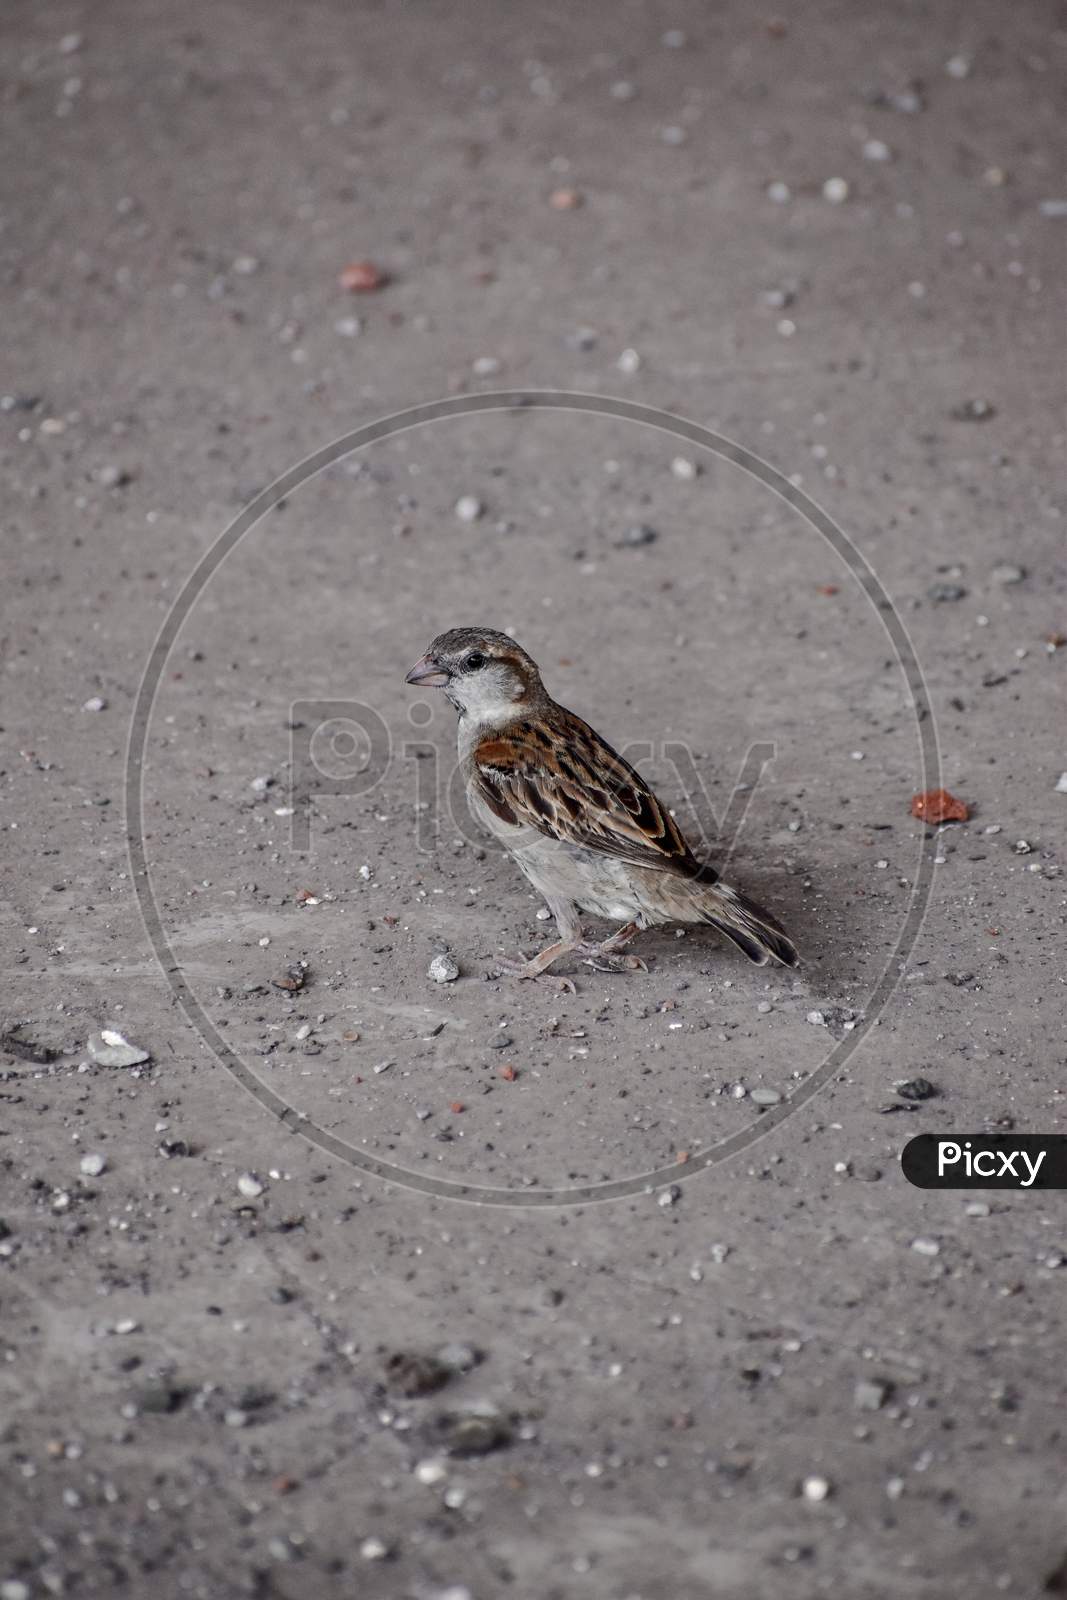 Sparrow seen on a building terrace during quarantine days